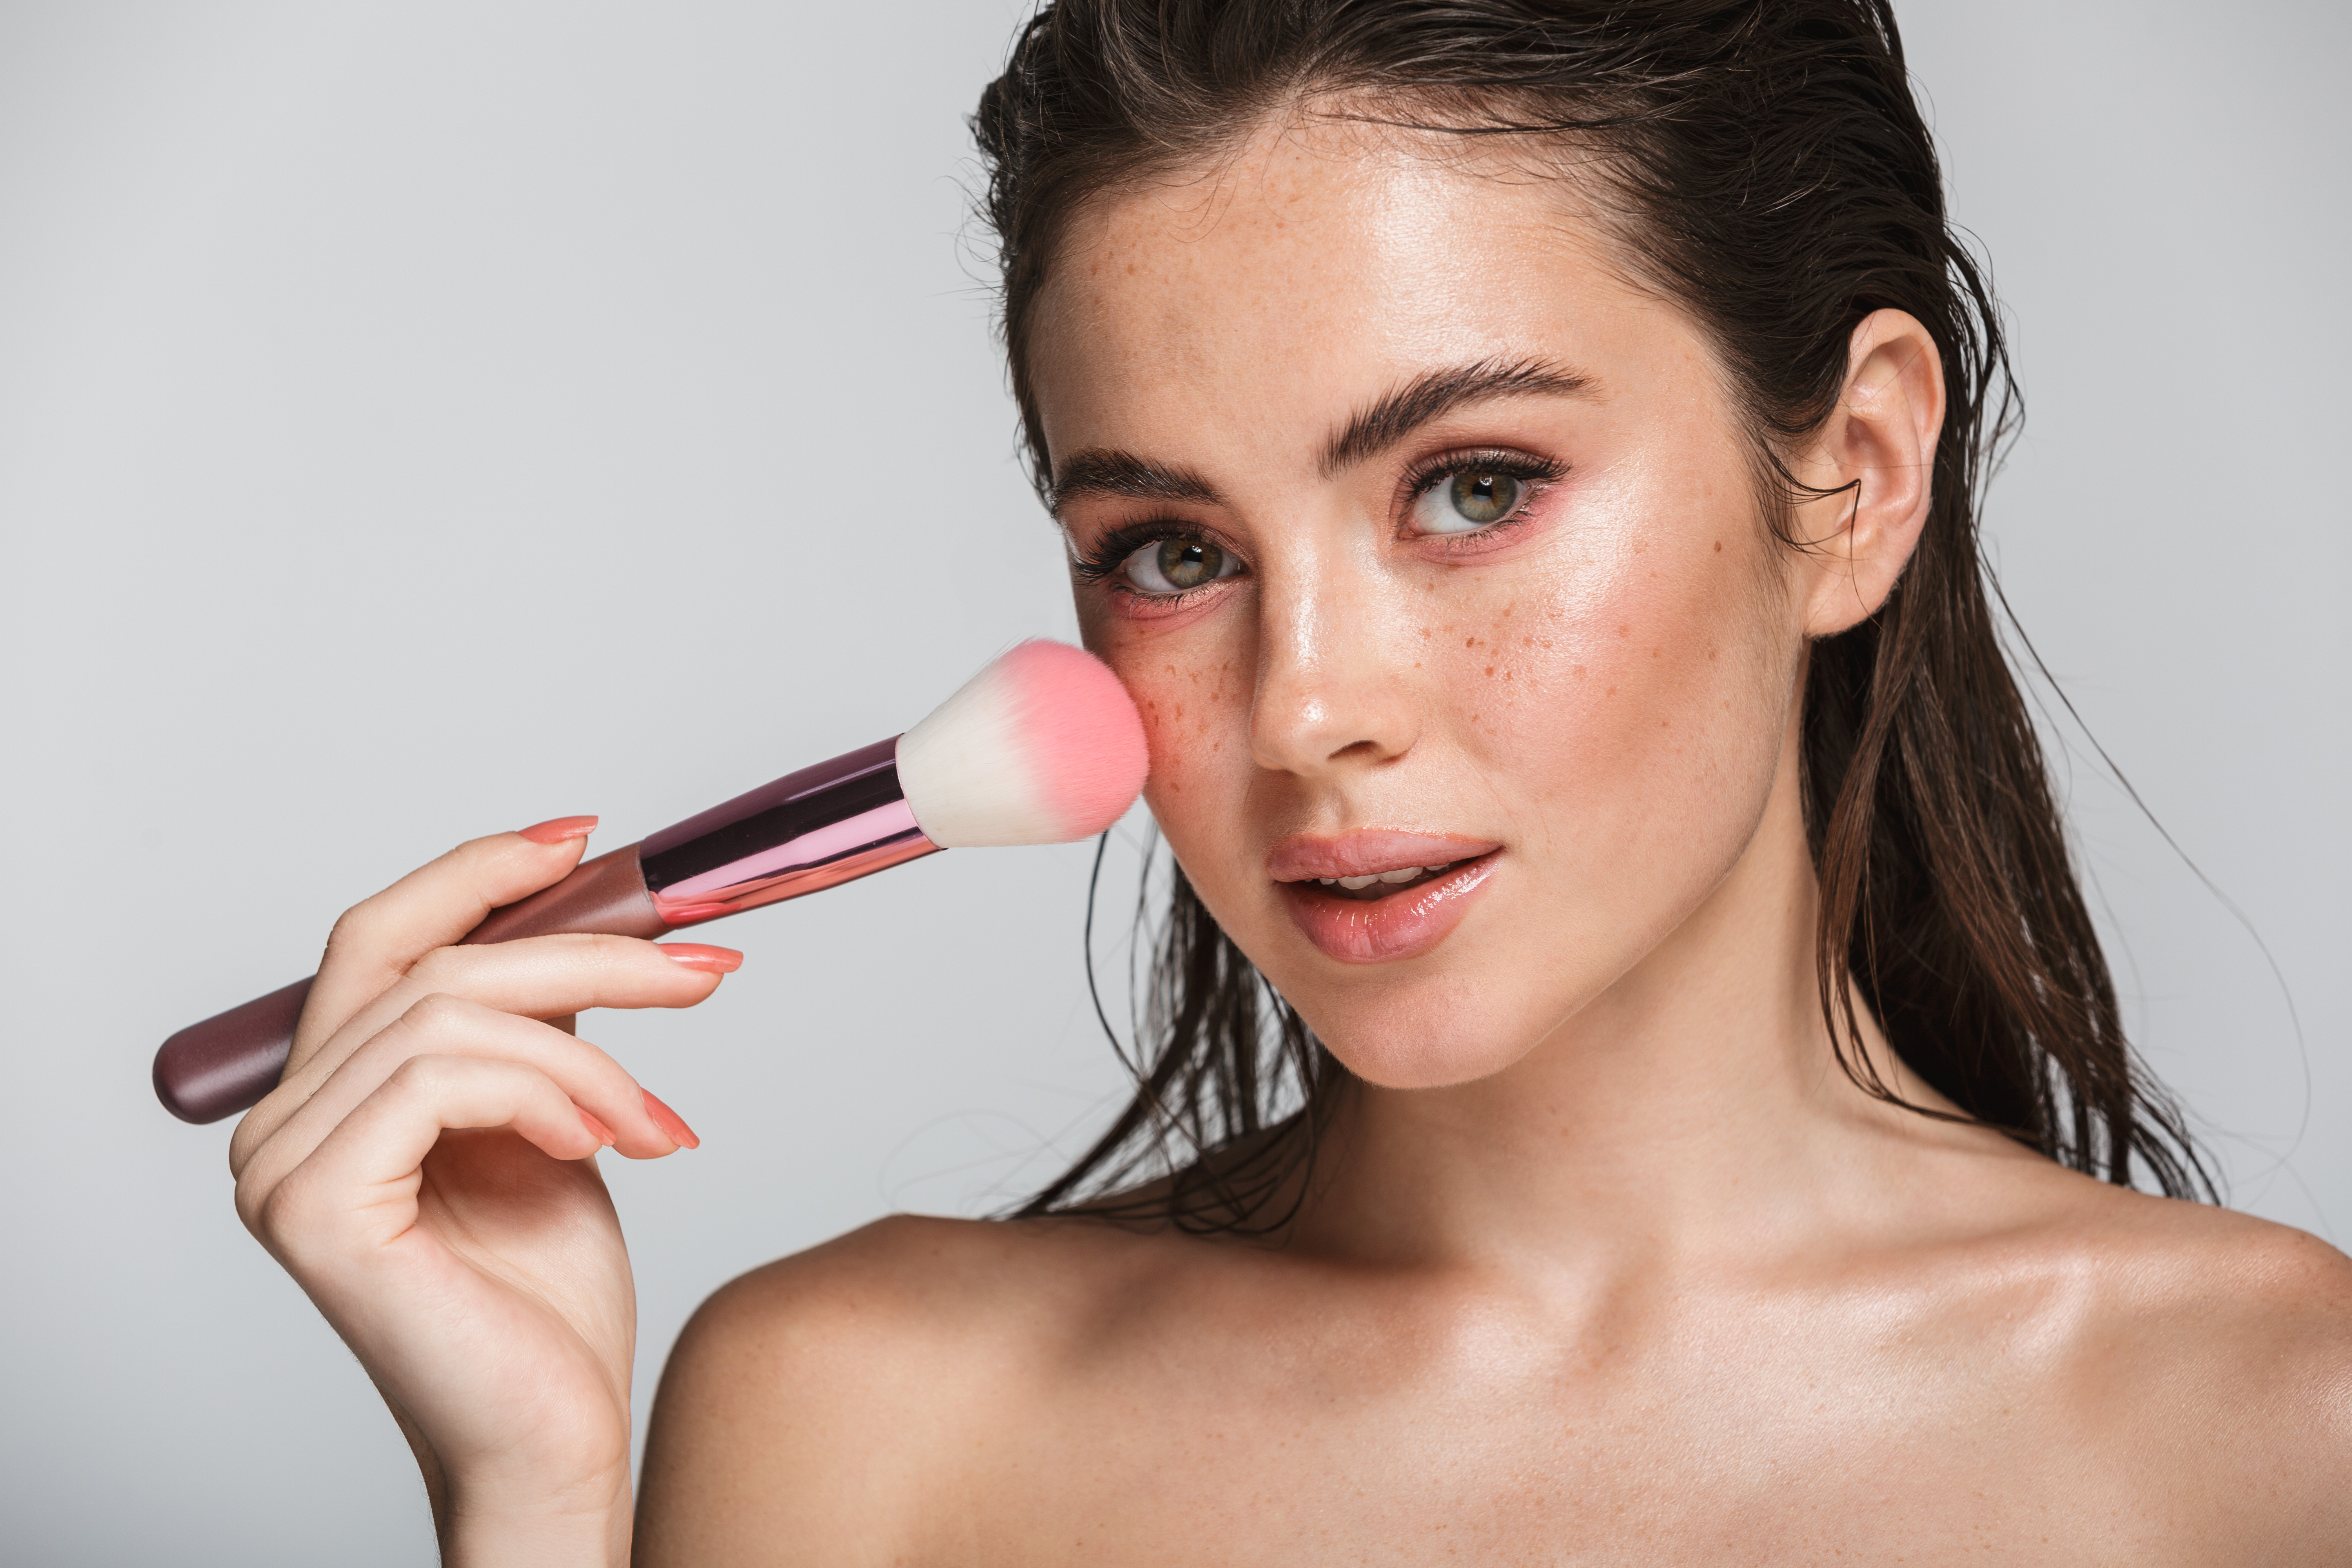 A model holding a makeup brush | Source: Shutterstock